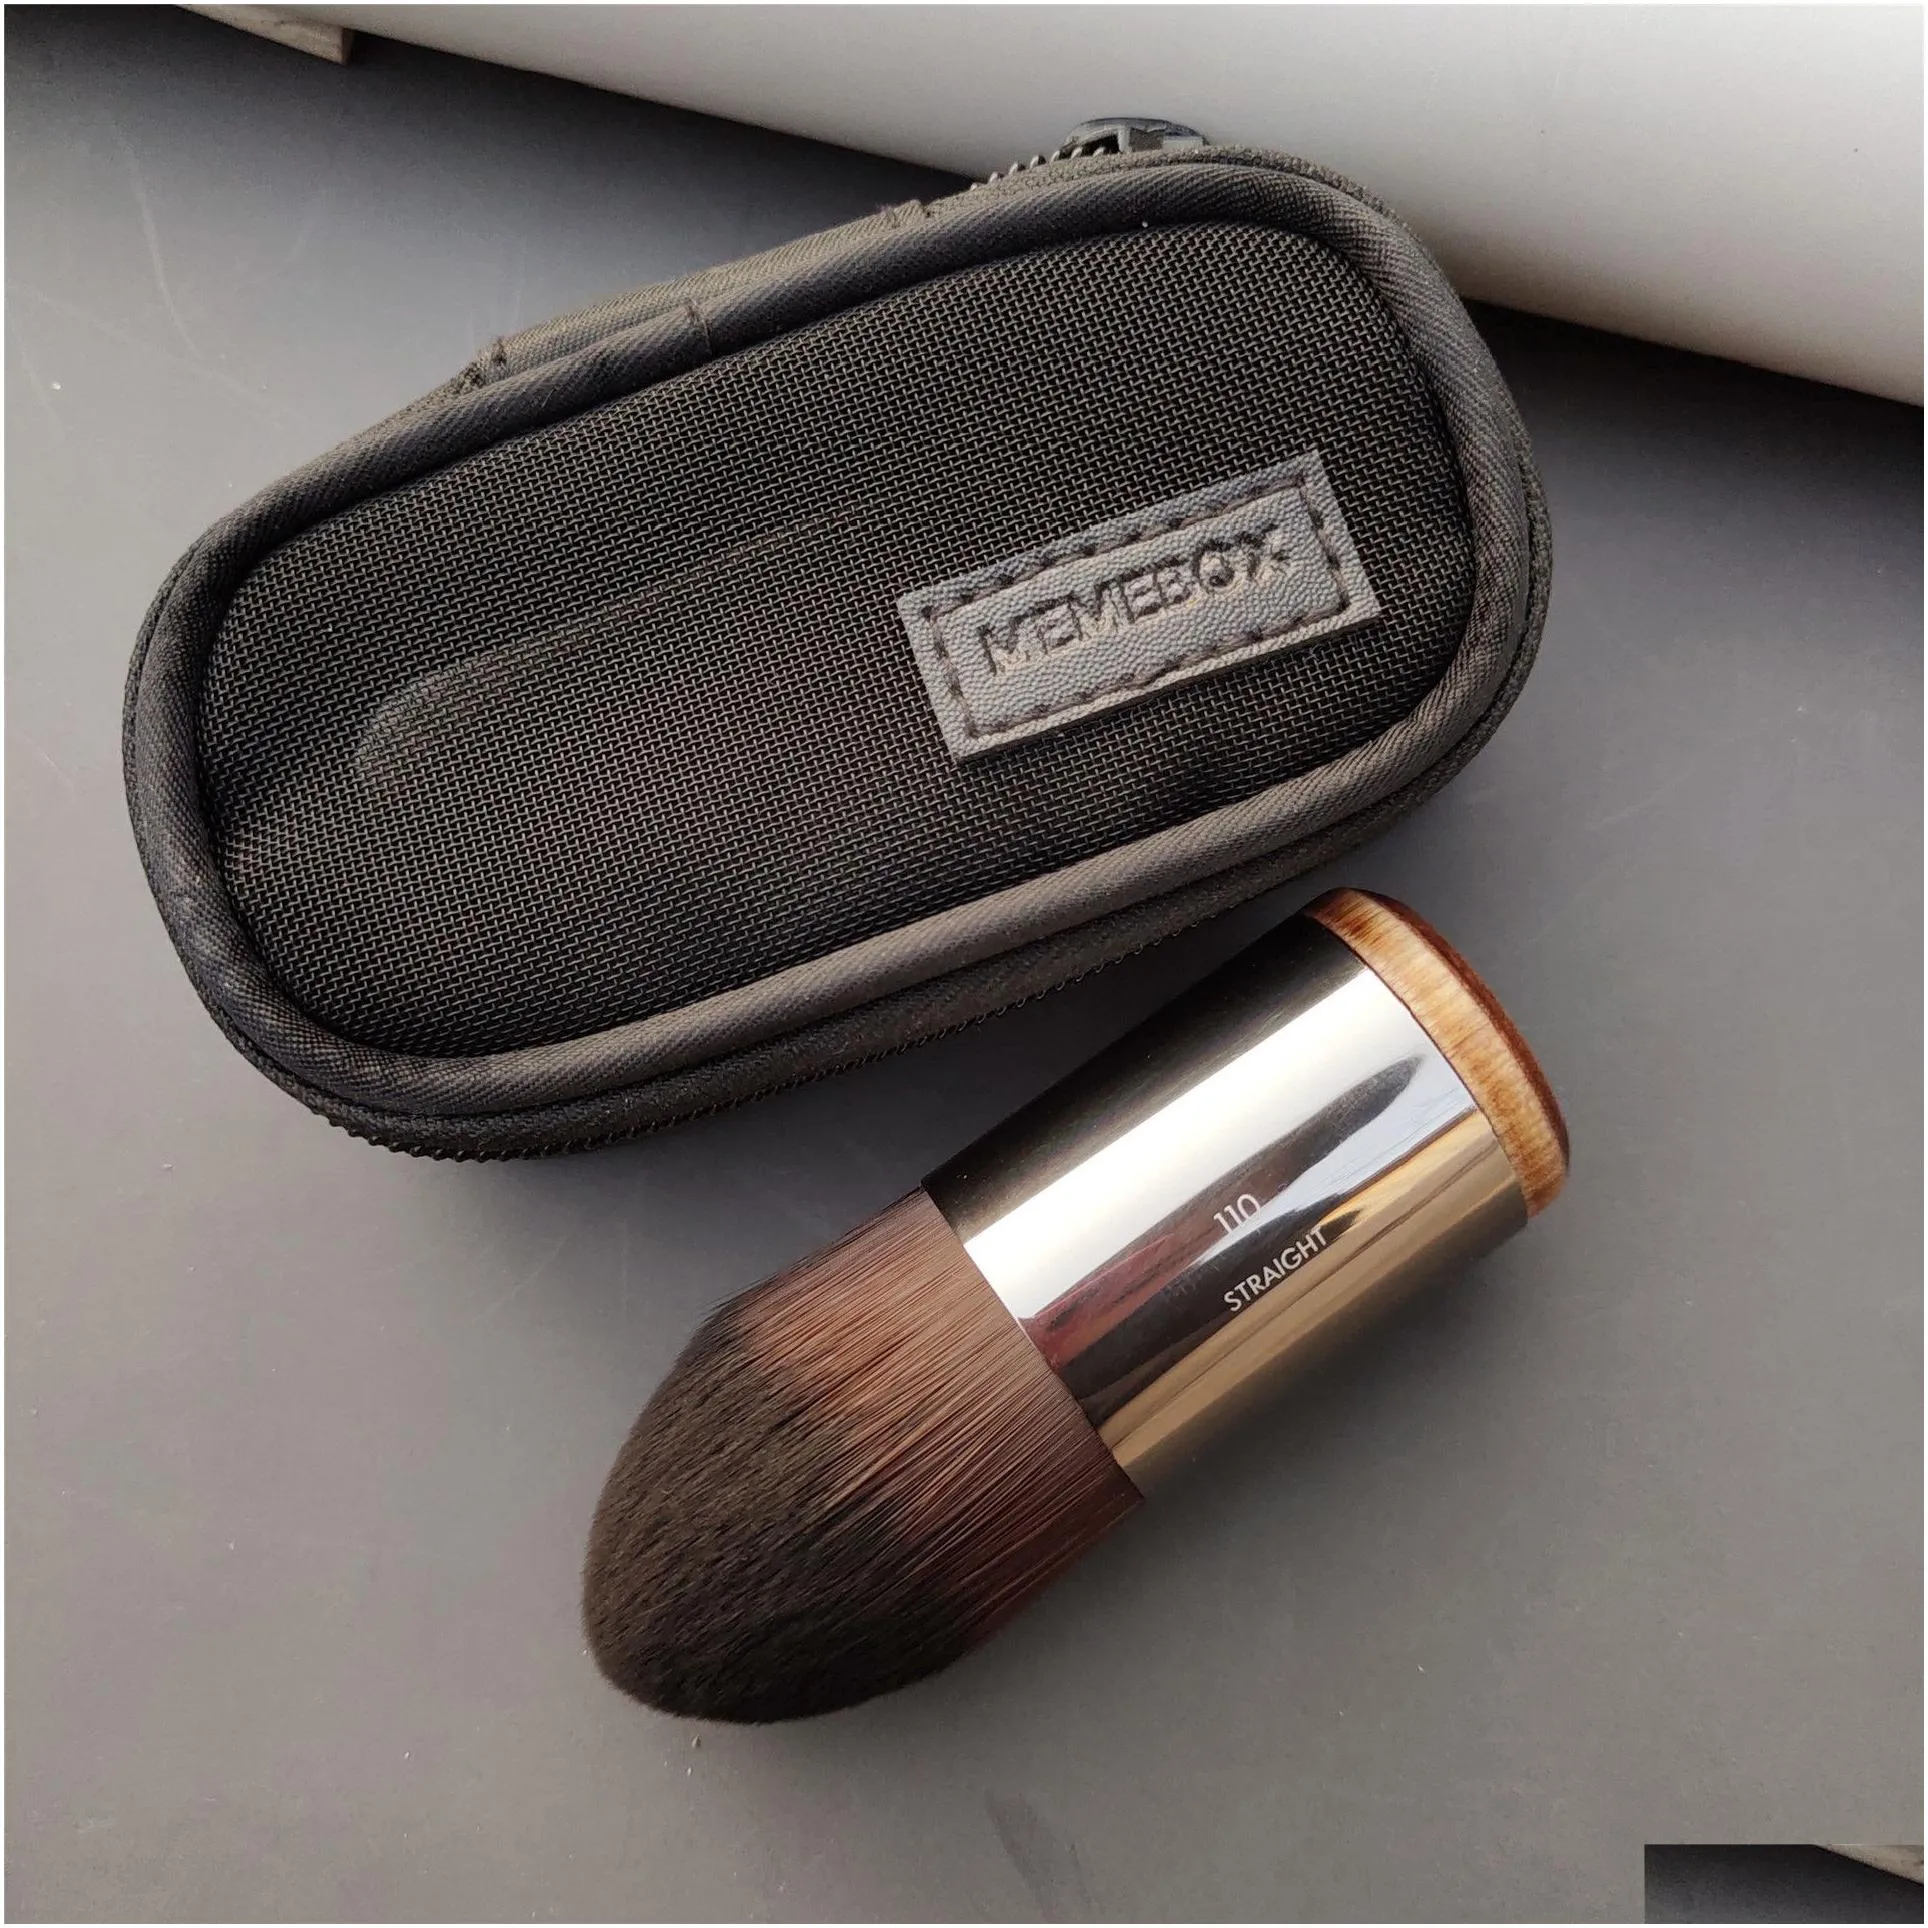 foundation kabuki makeup brush 110 portable multi-purpose face contour blending beauty cosmetics brushes tools